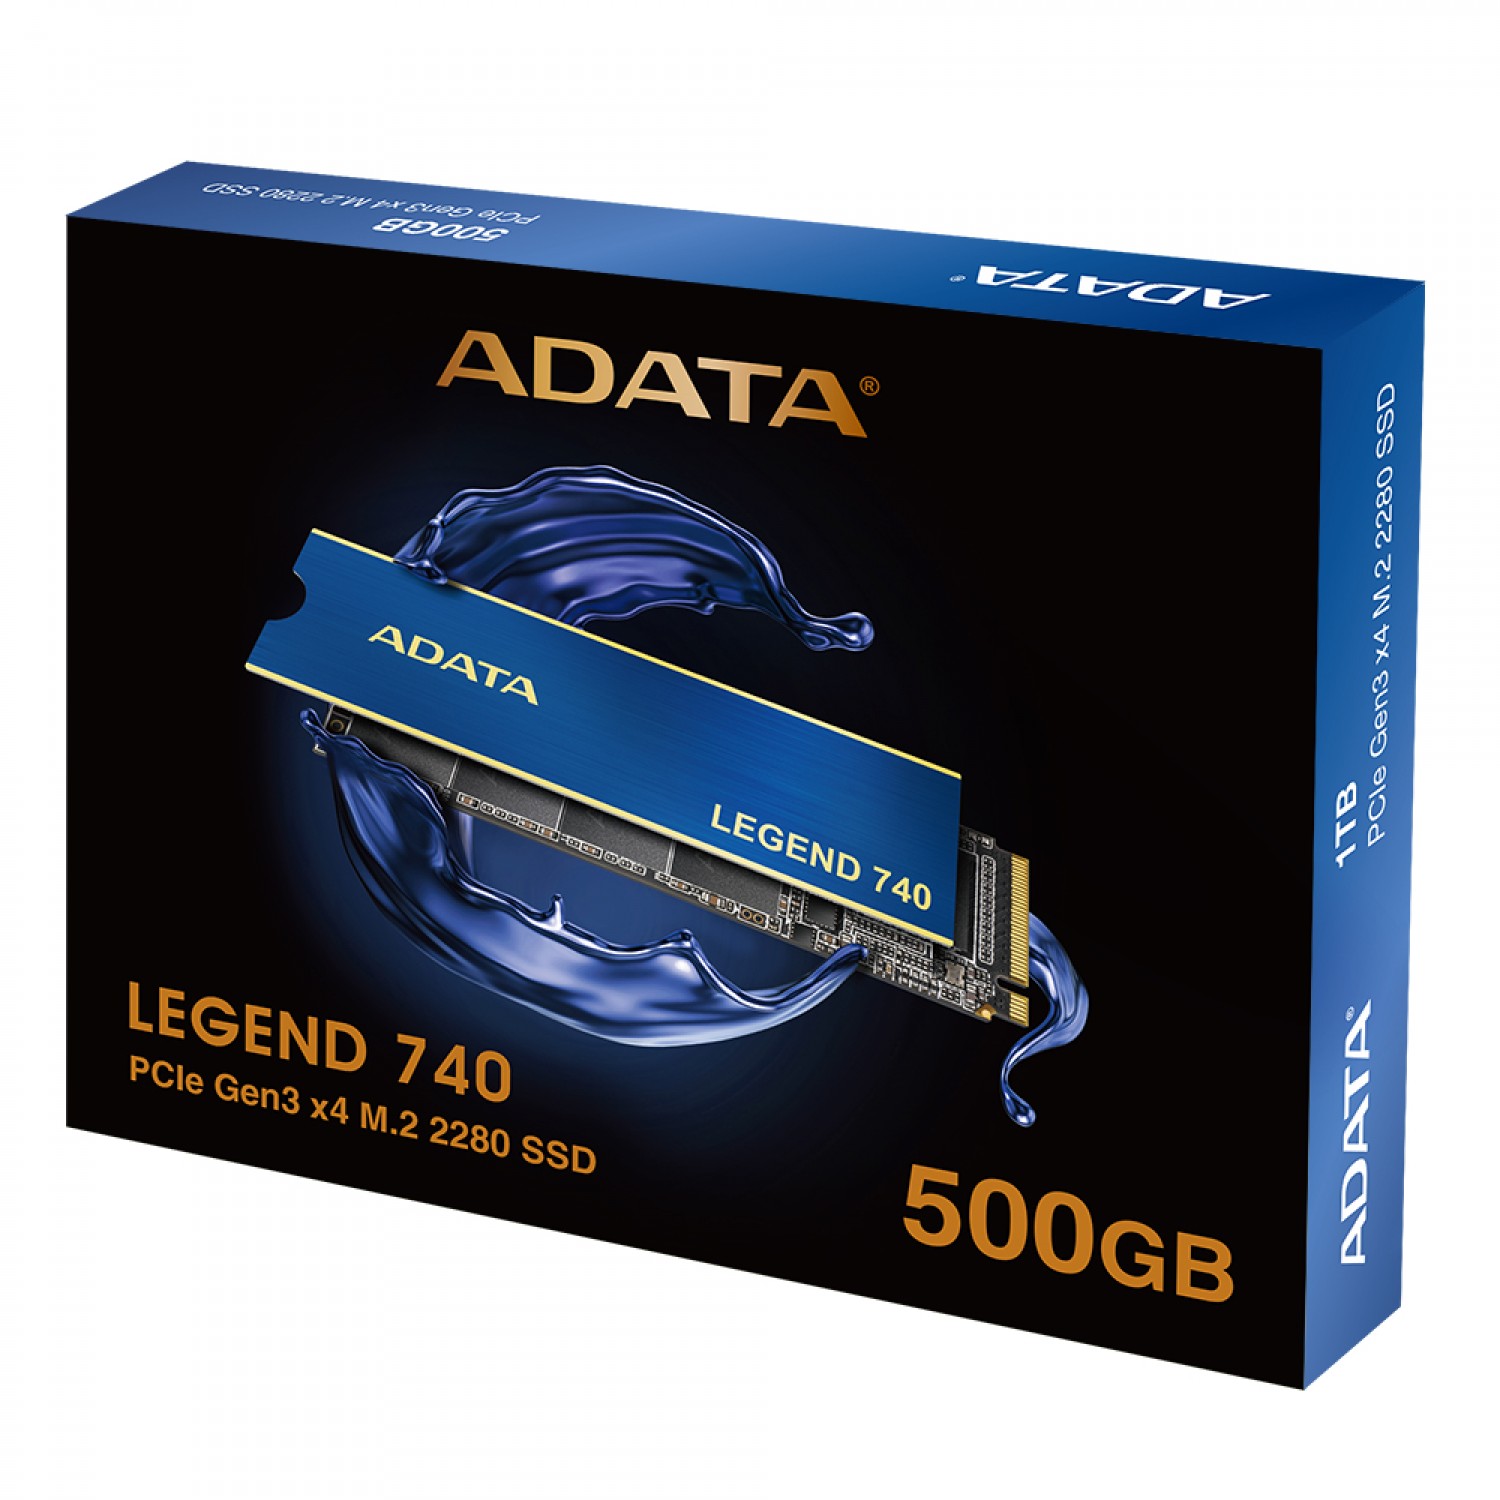 حافظه اس اس دی ADATA Legend 740 500GB-6